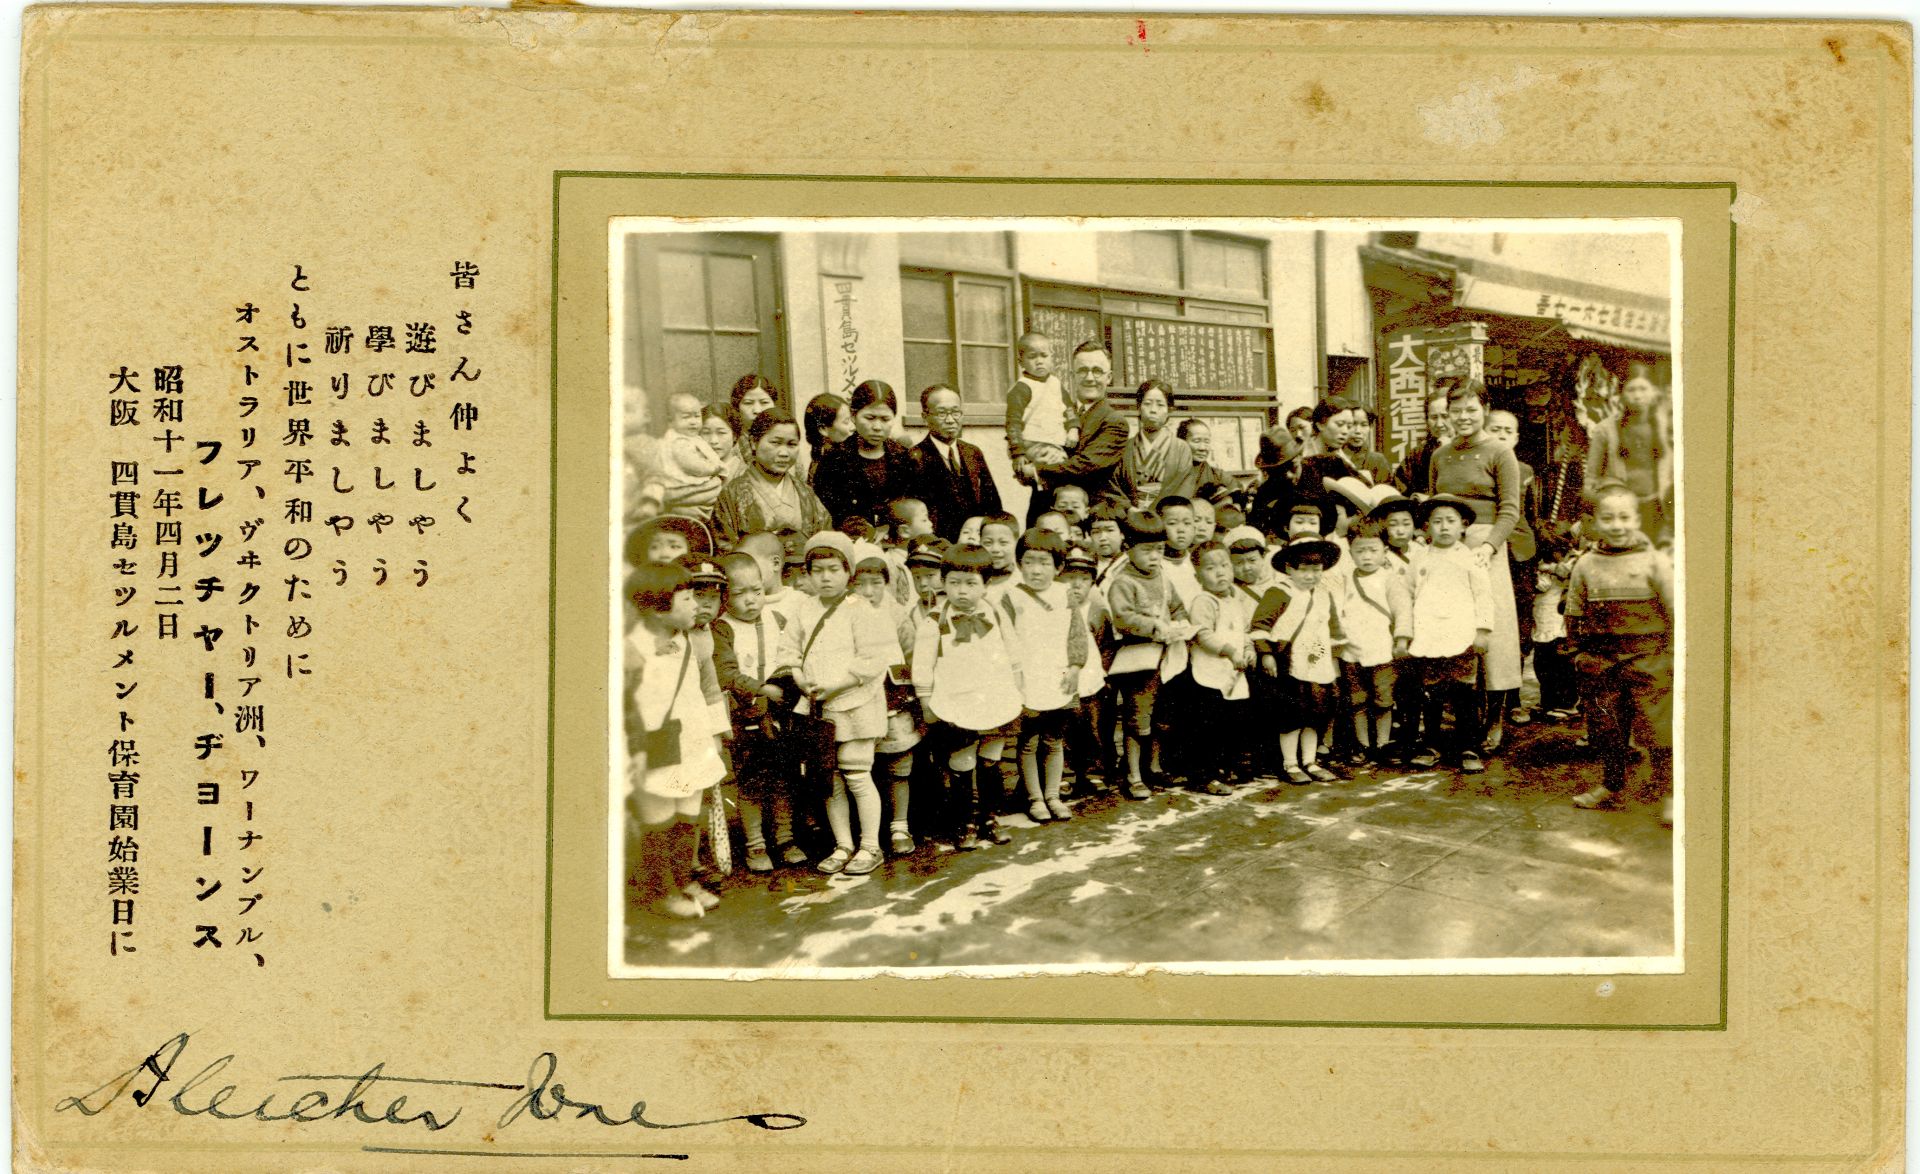 Fletcher Jones at Kawaga School, Japan 1936